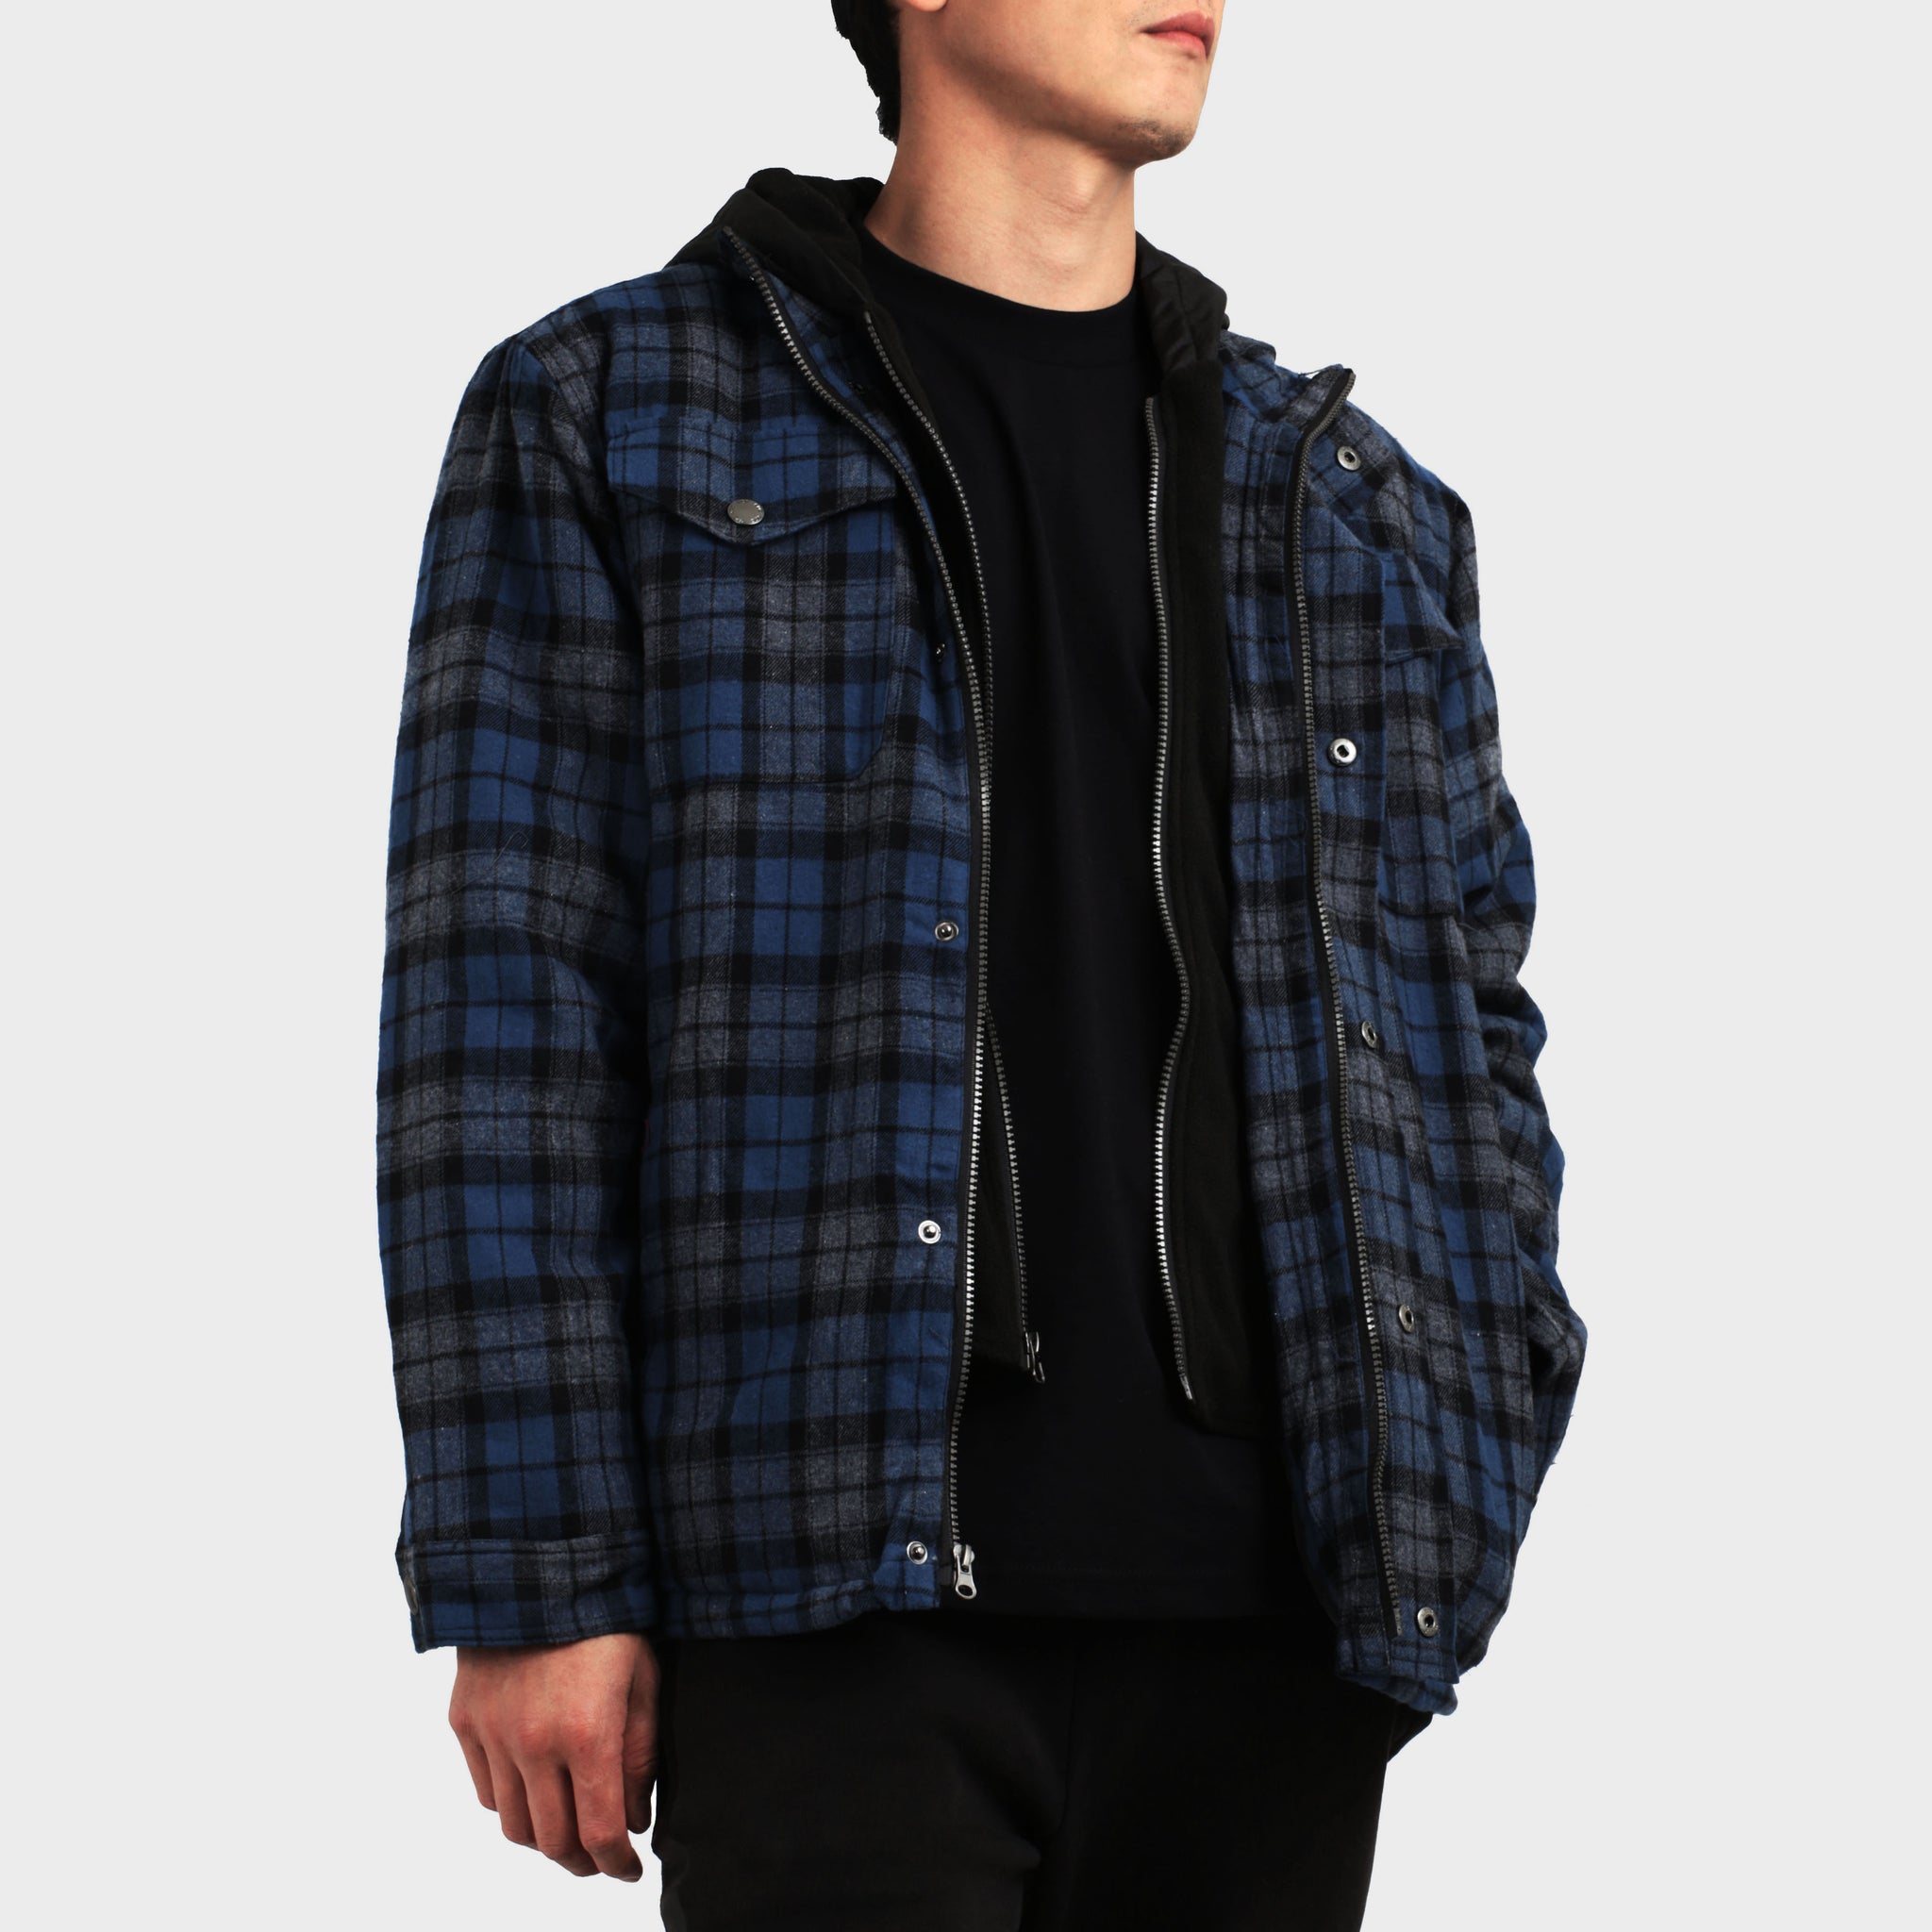 flannel jacket_flannel shirt jacket_sherpa lined flannel_flannel jacket with hood_mens flannel jacket_quilted flannel jacket_flannel lined jacket_Navy